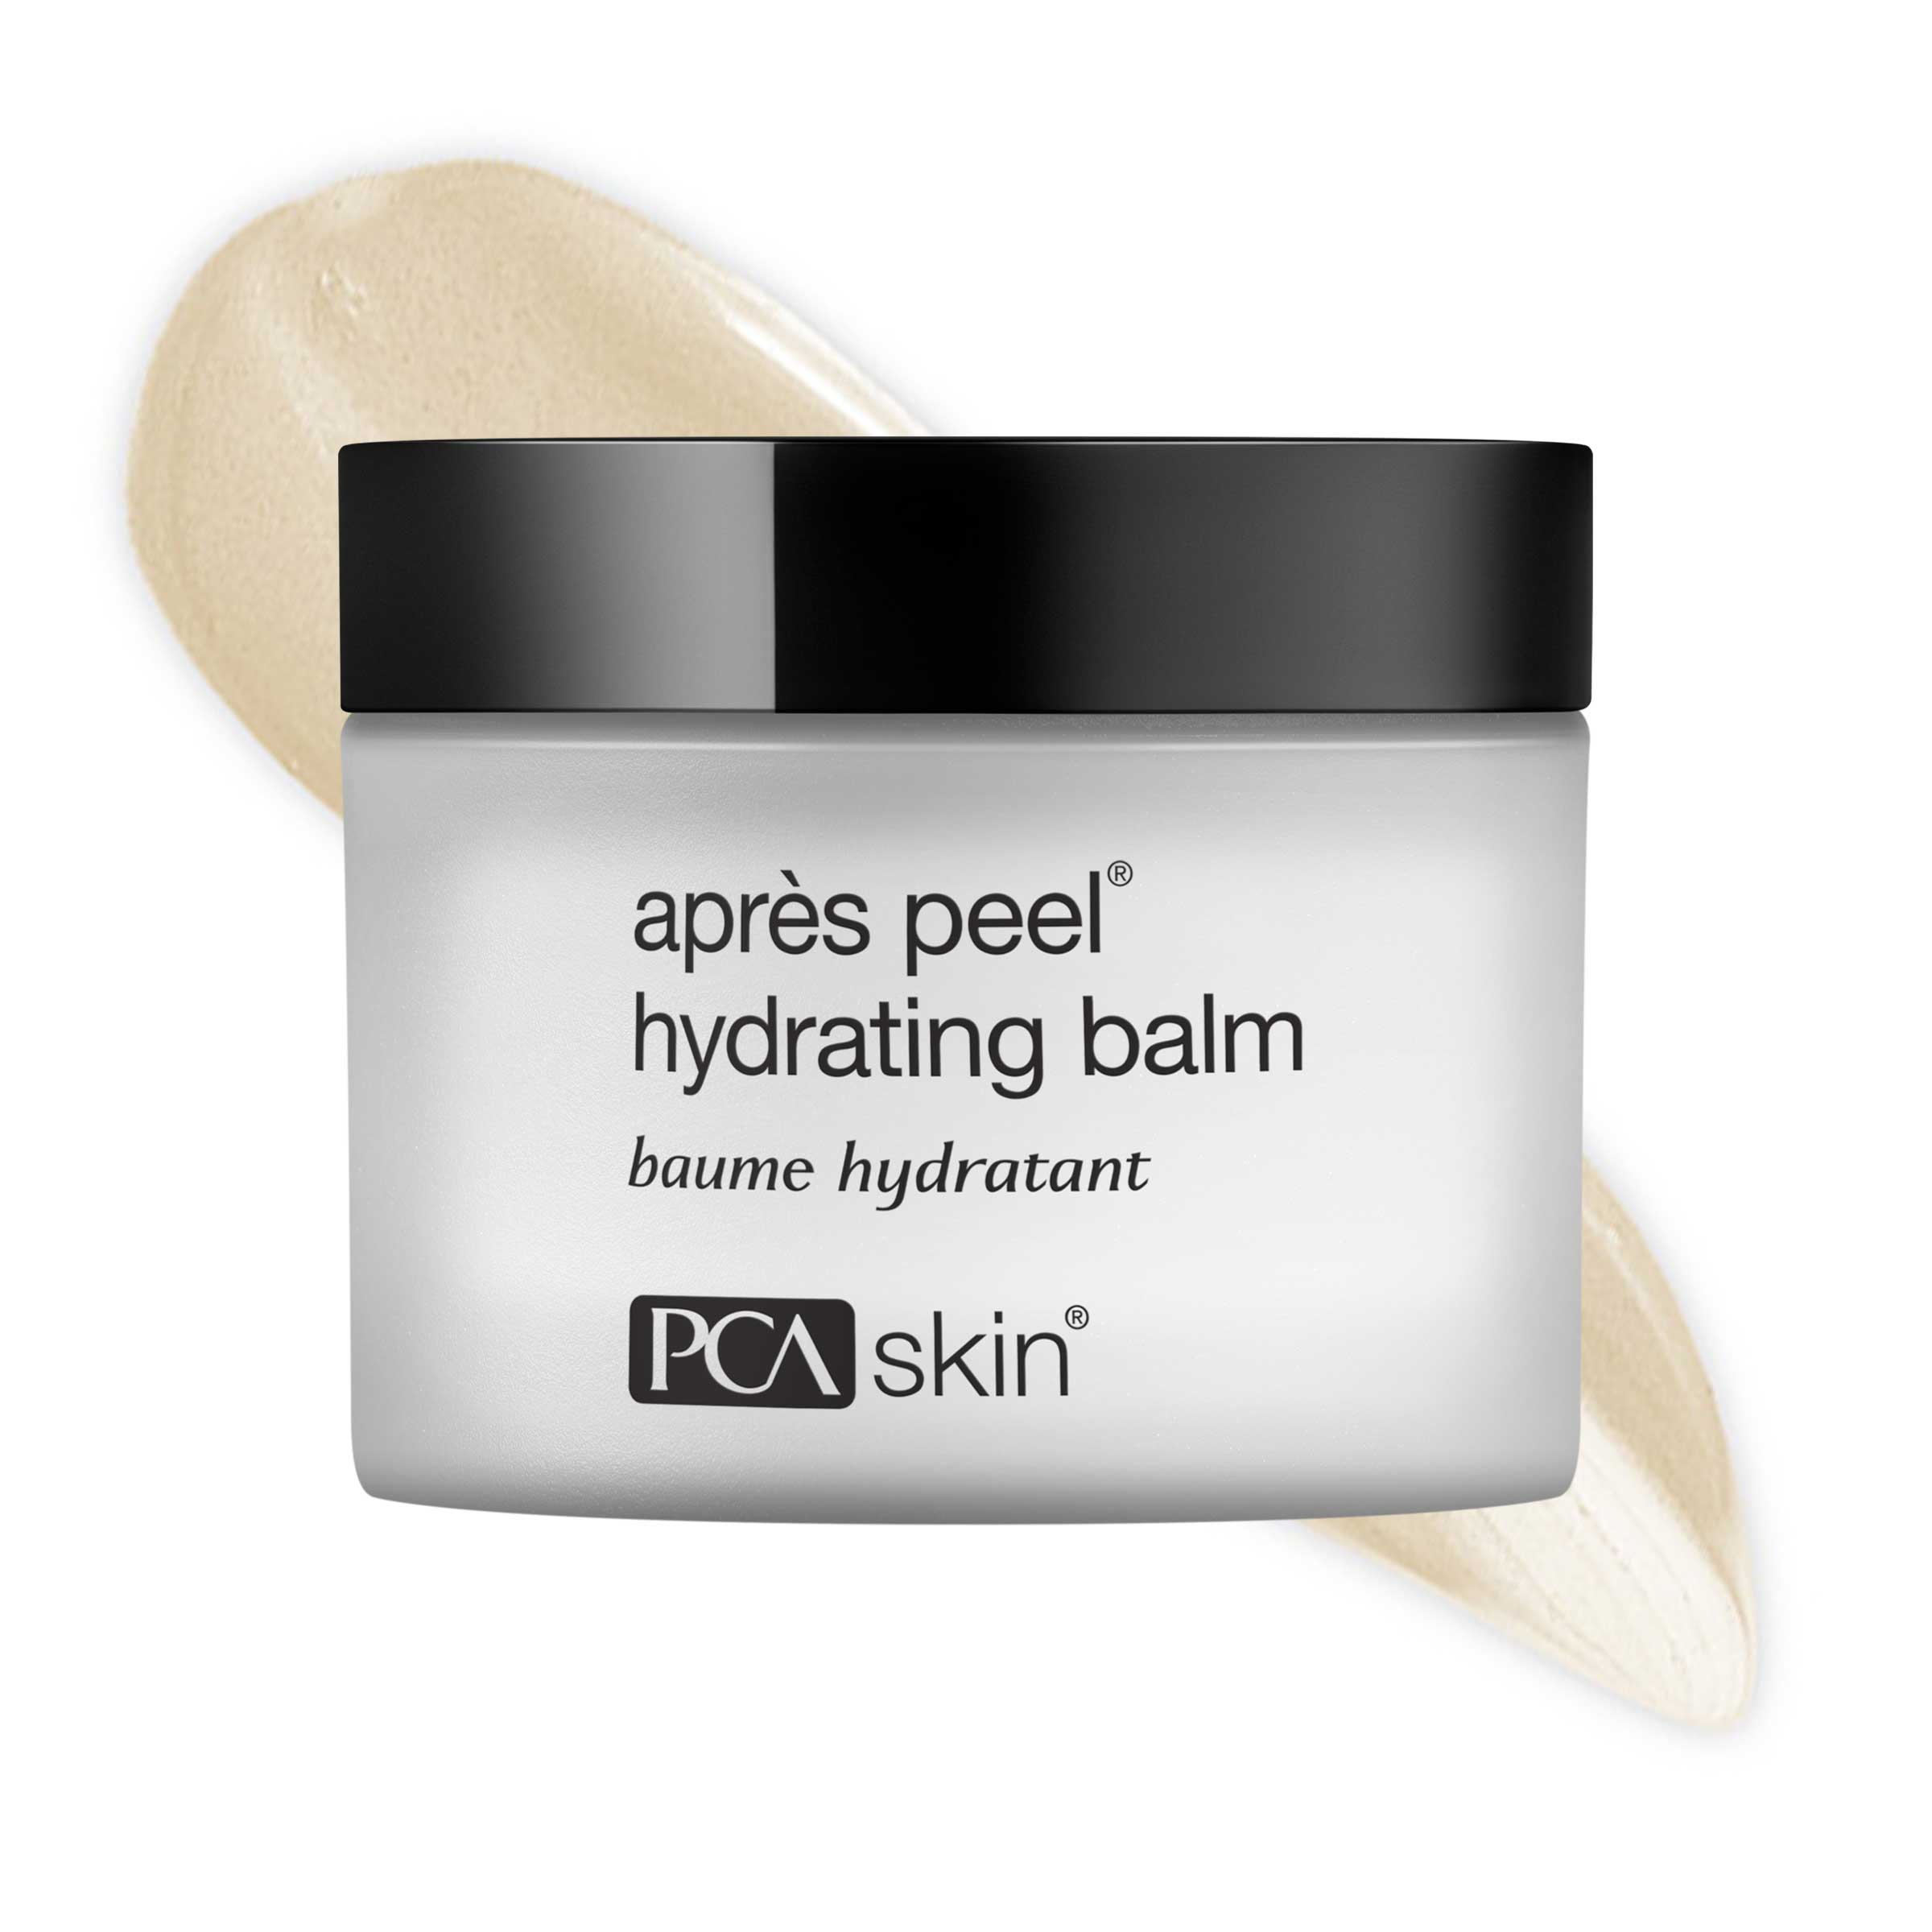 PCA Skin Apres Peel Hydrating Balm (1.7 oz)